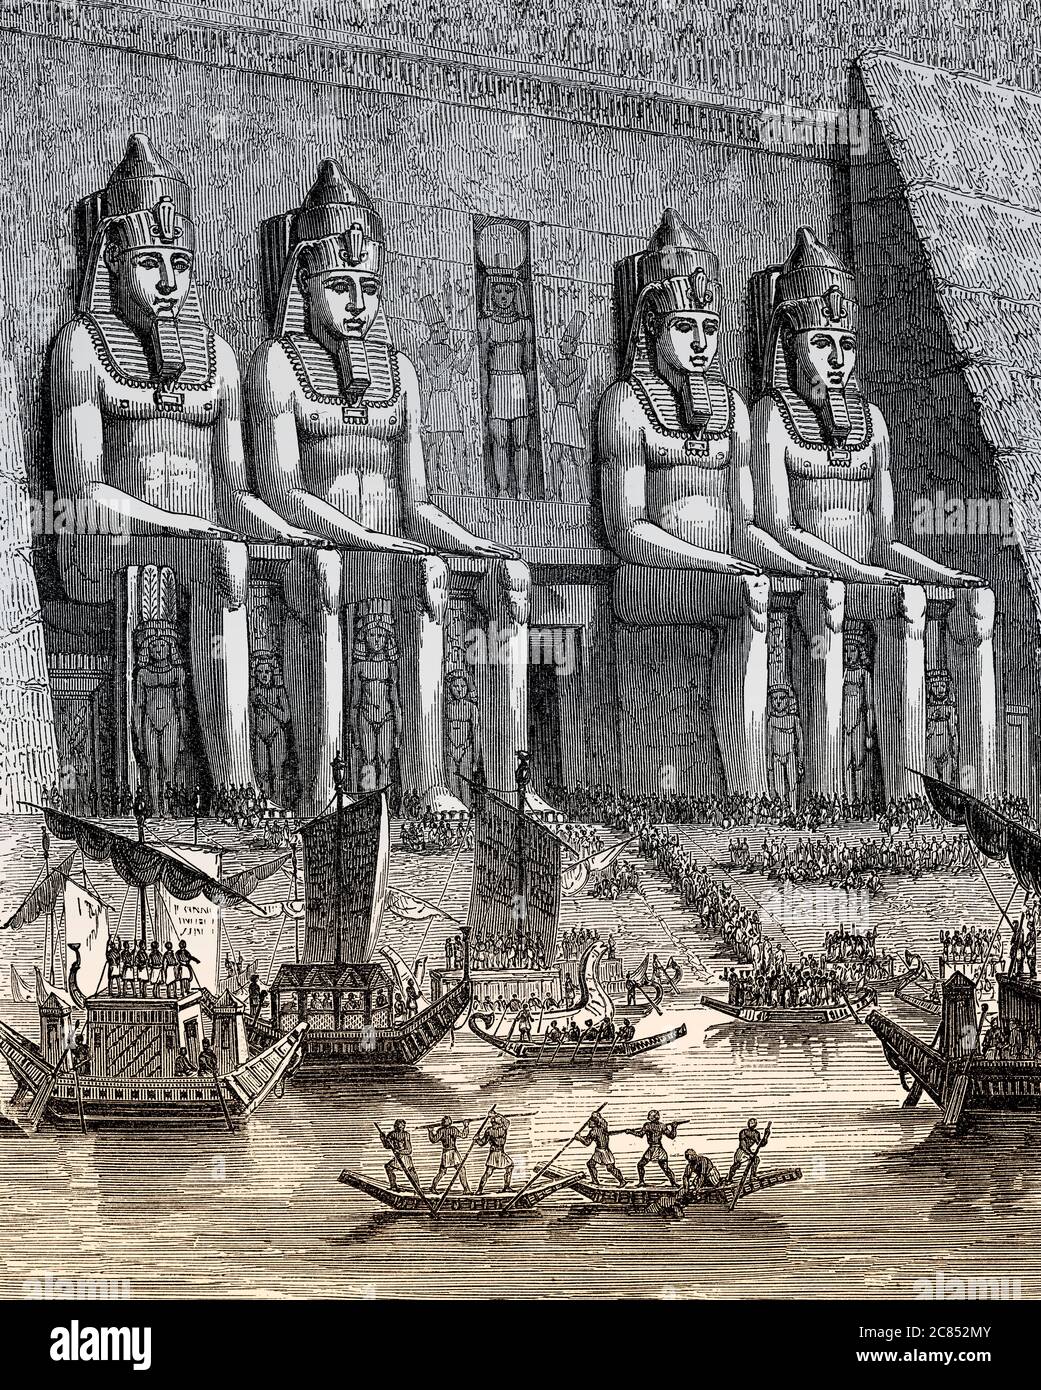 Antiguos barcos egipcios, templo de Abu Simbel, dibujo del siglo 19 Foto de stock